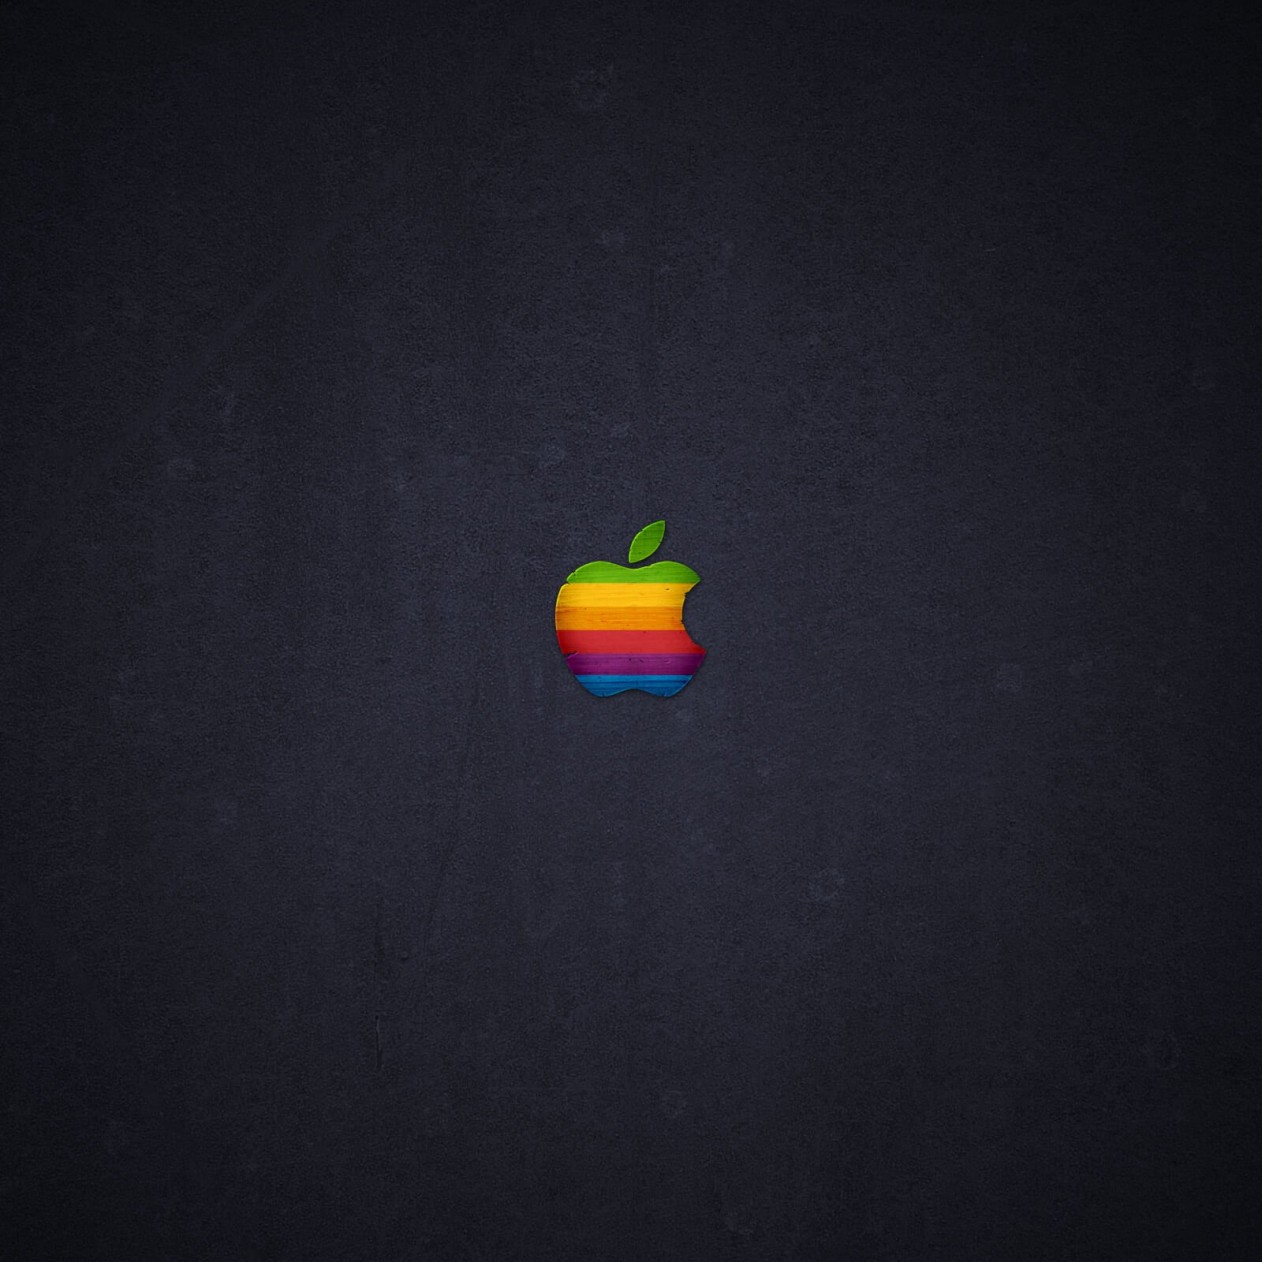 Wood Retro Apple Wallpaper for Apple iPad mini